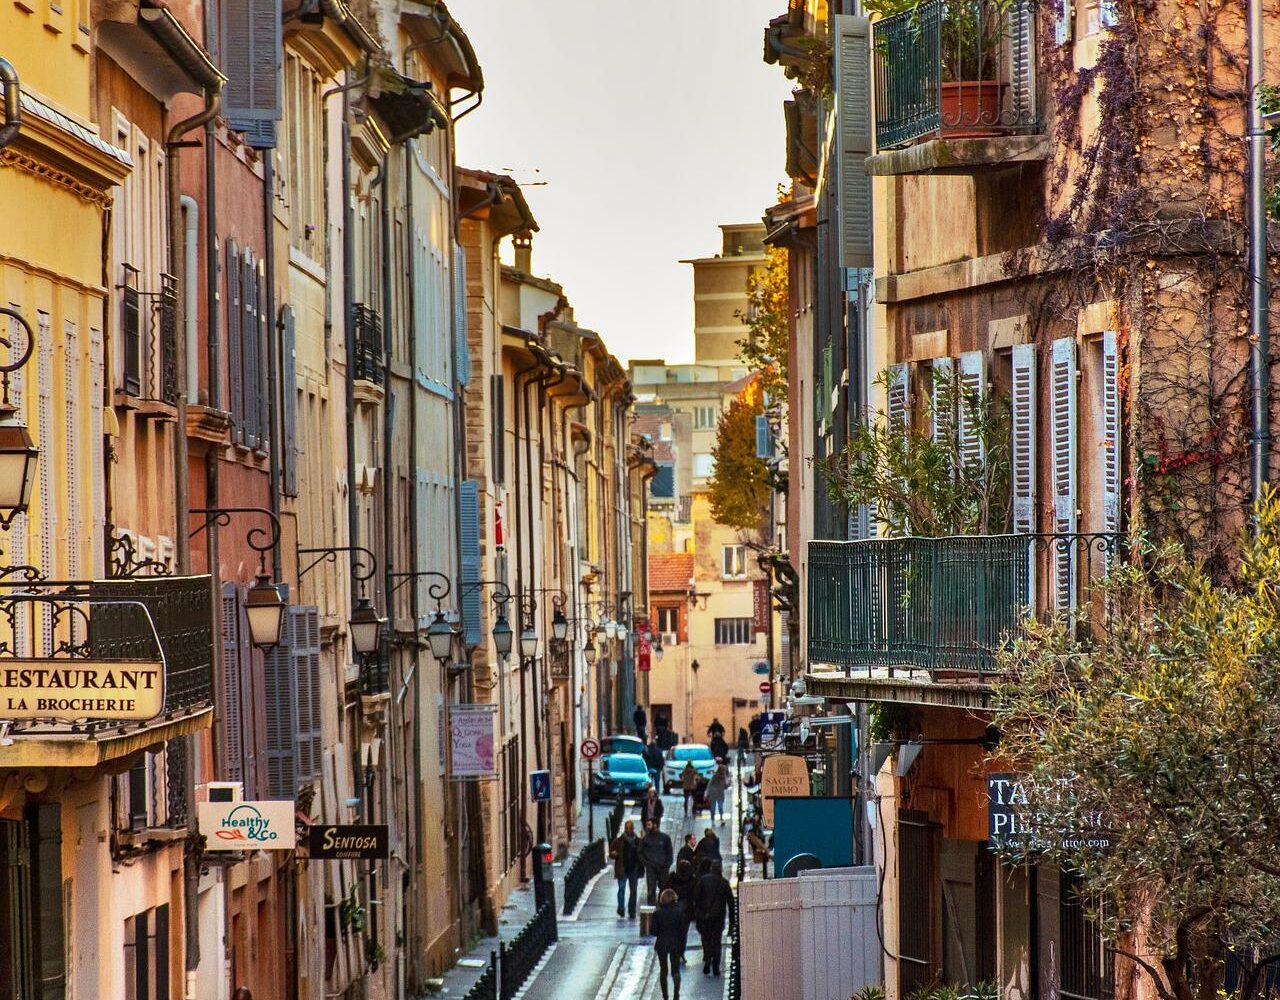 Vue d'une rue à Aix en Provence